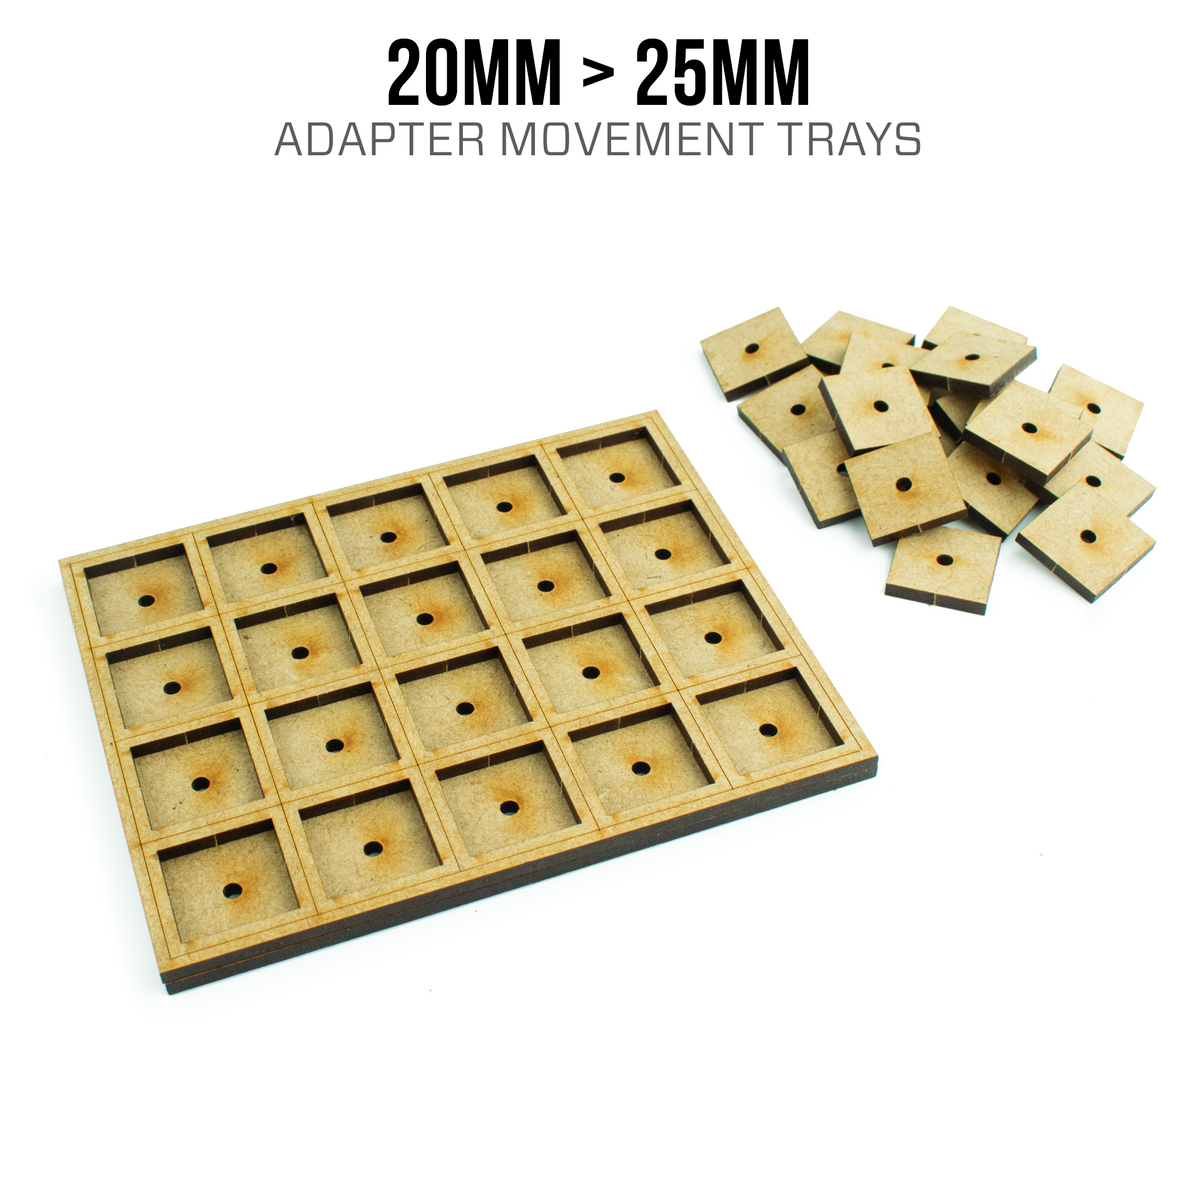 20 > 25mm Adapter Movement Trays